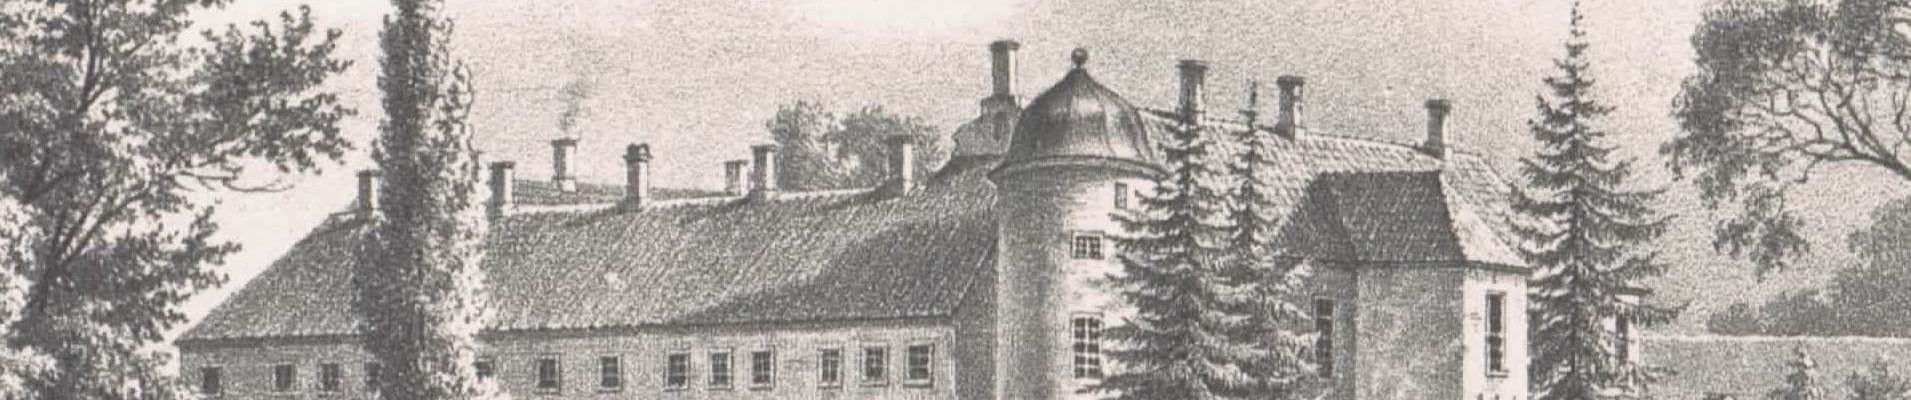 Hvedholm Slotshotel Historie